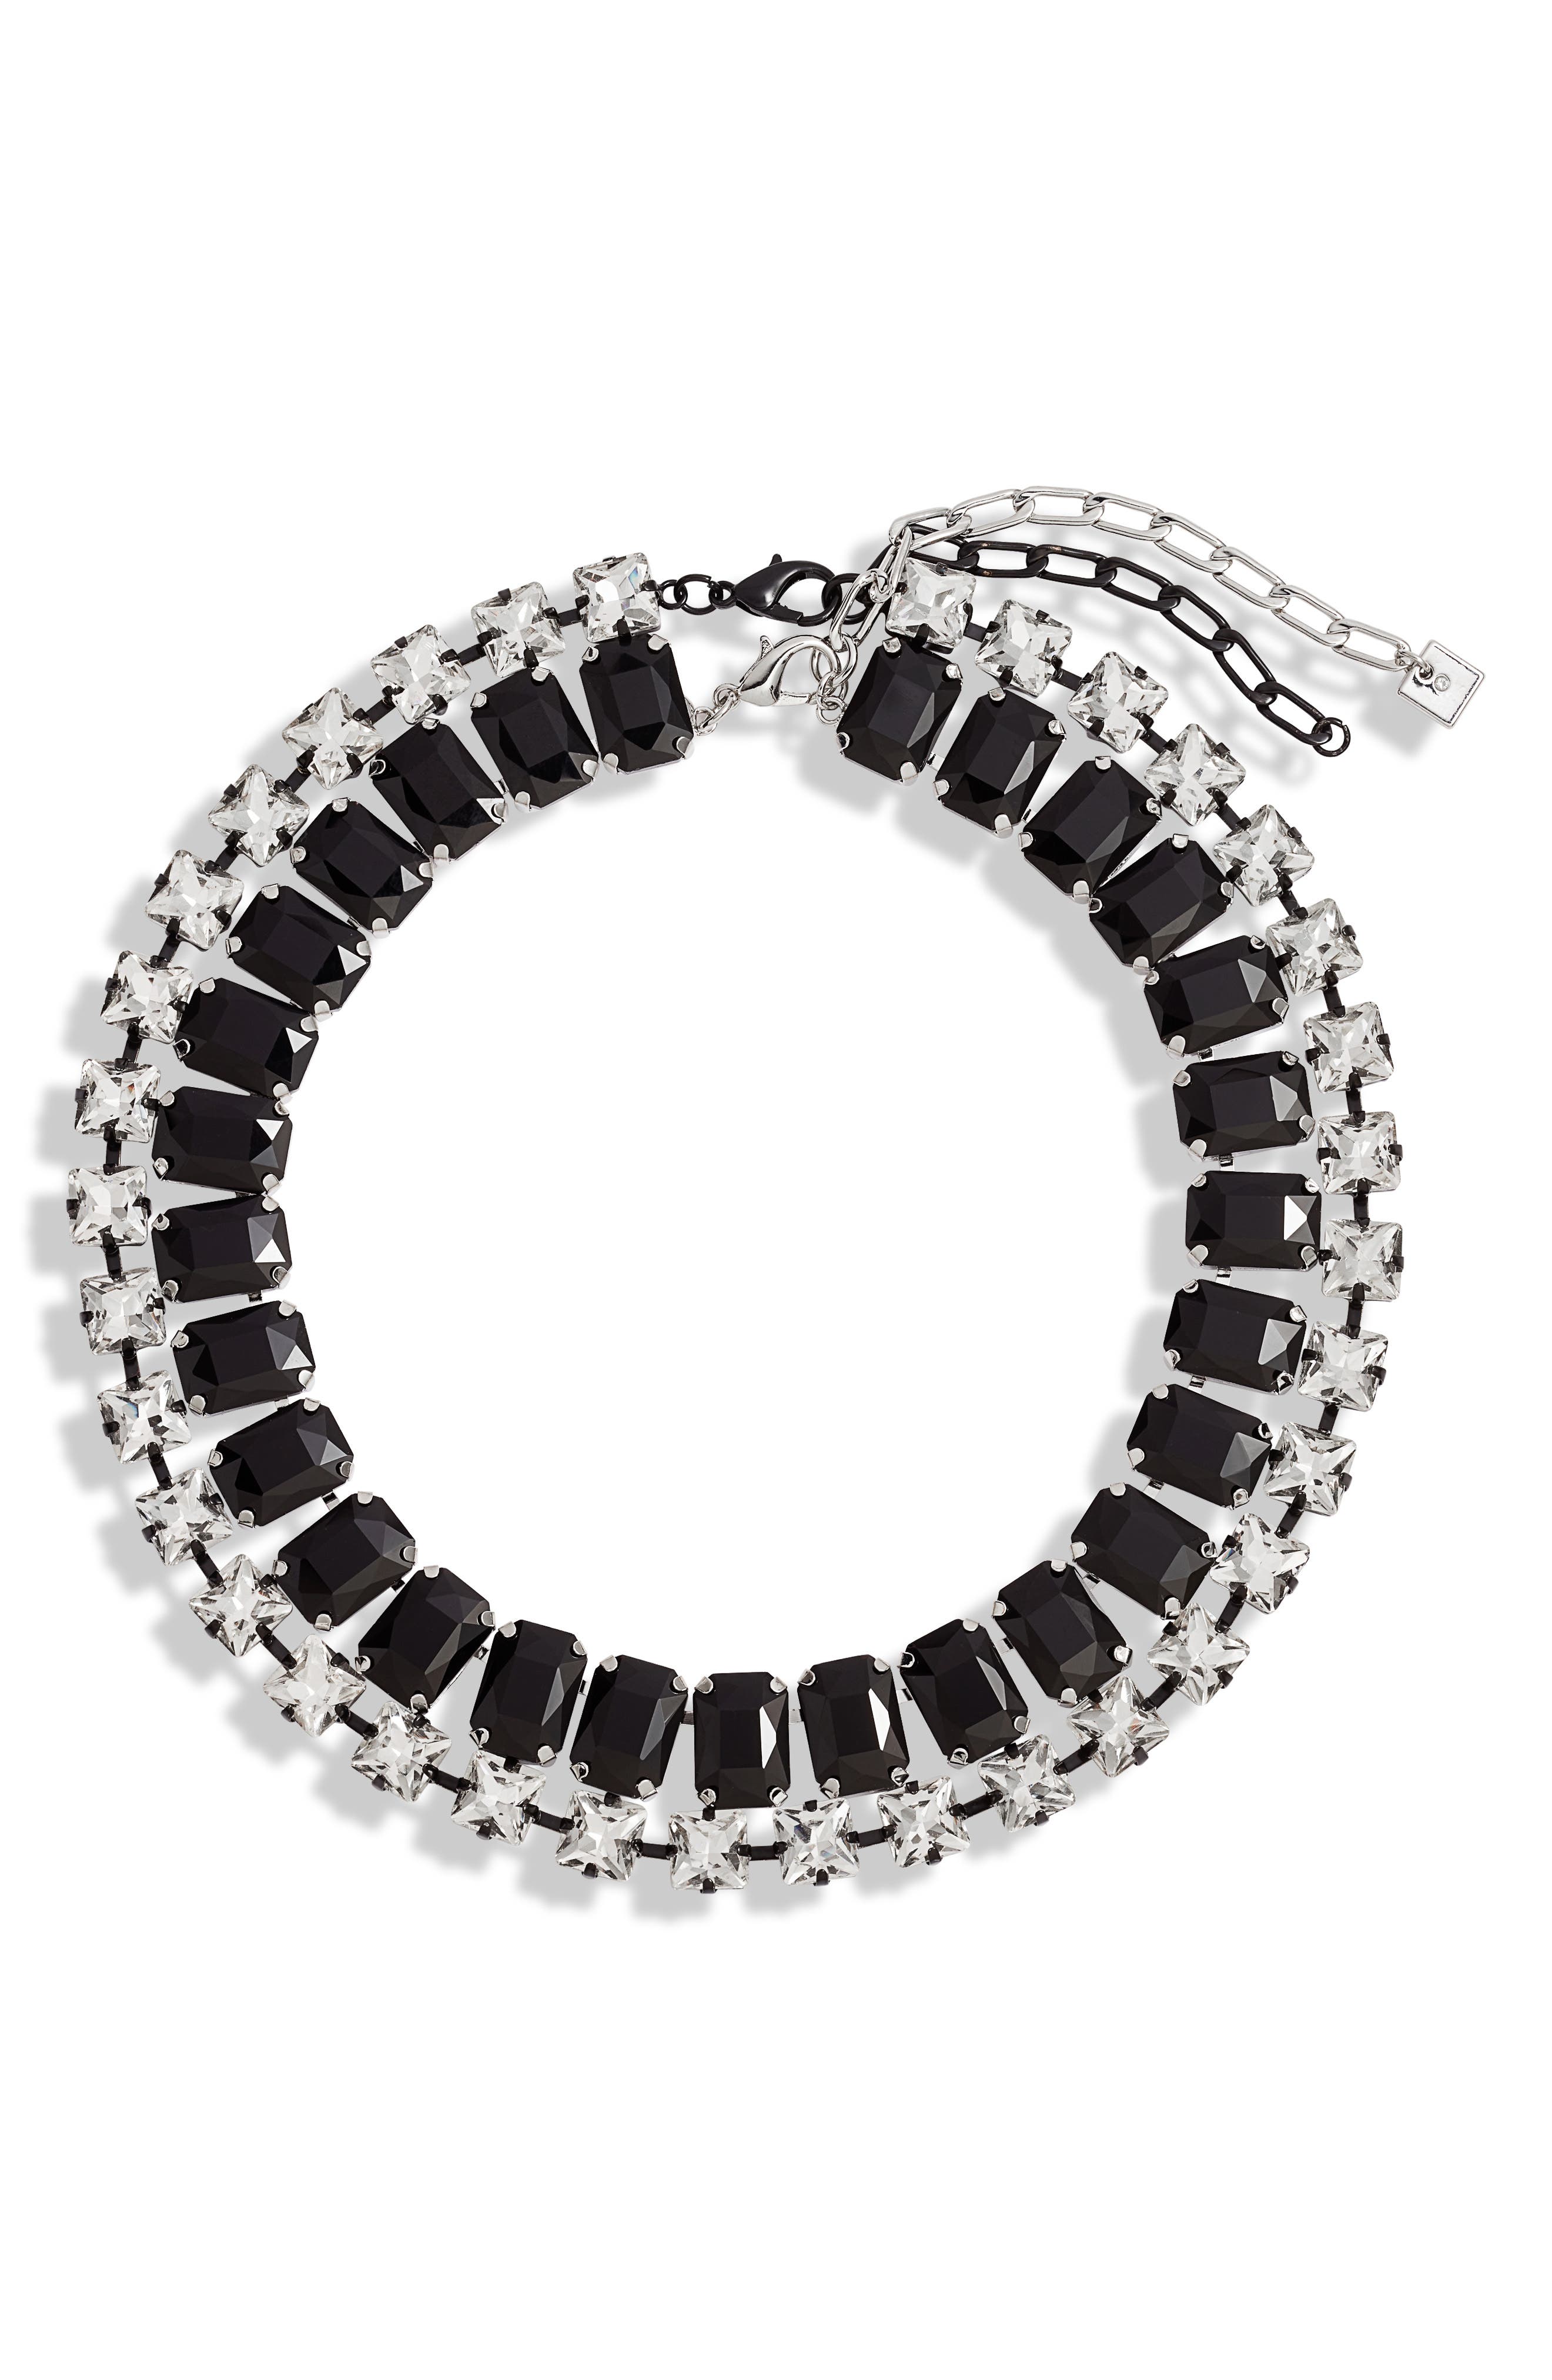 NoName Maxi black necklace Black Single WOMEN FASHION Accessories Costume jewellery set Black discount 55% 